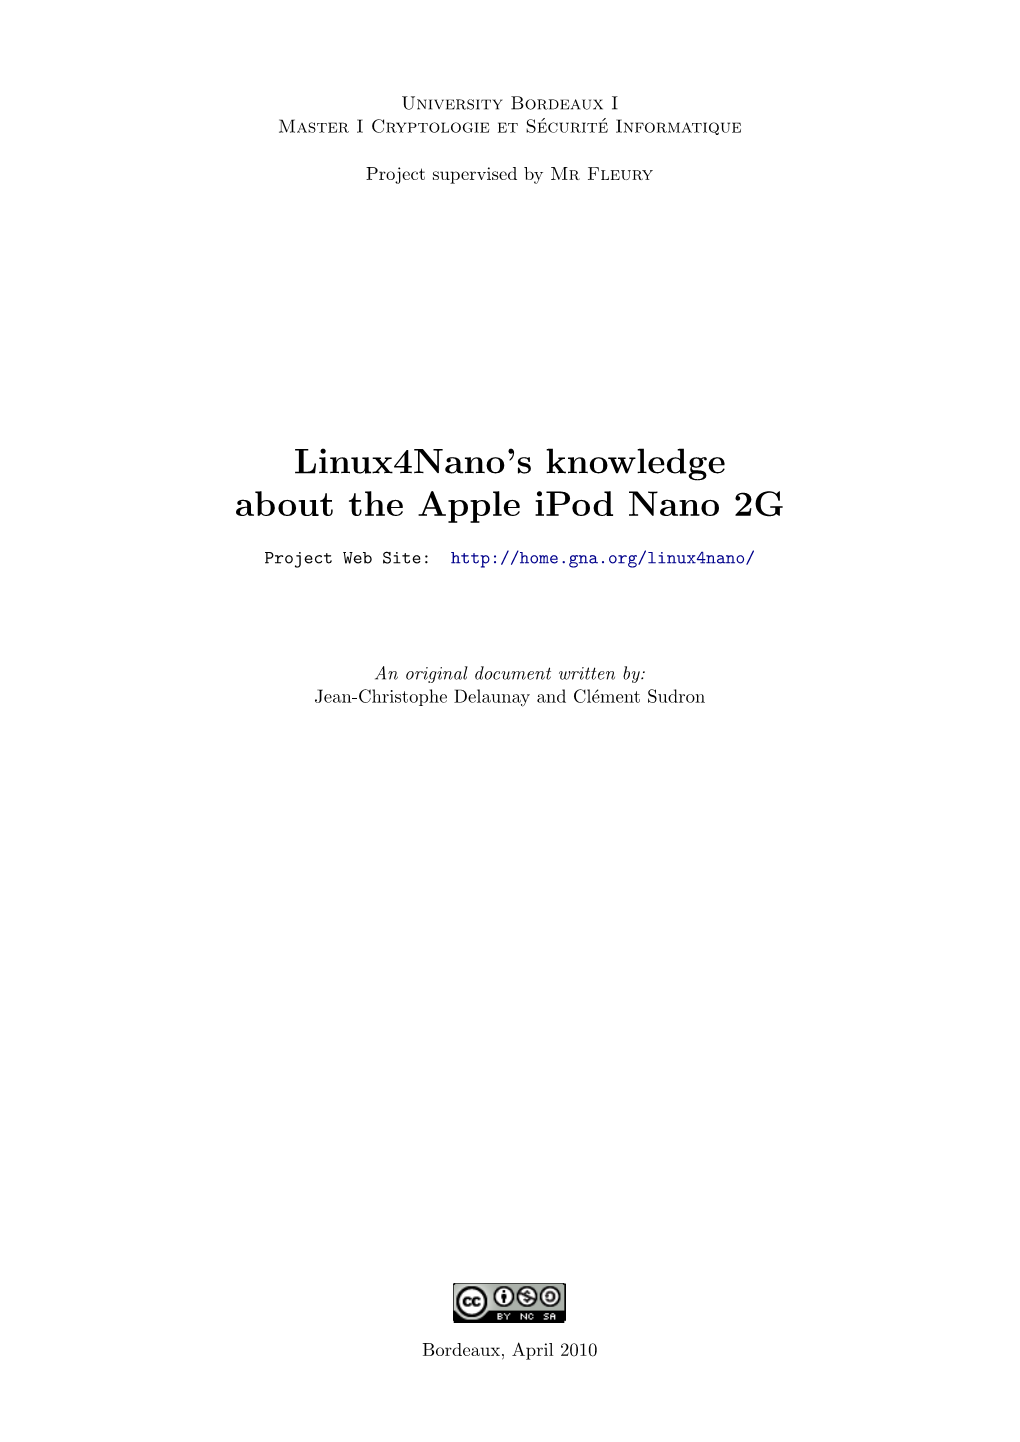 Linux4nano's Knowledge About the Apple Ipod Nano 2G